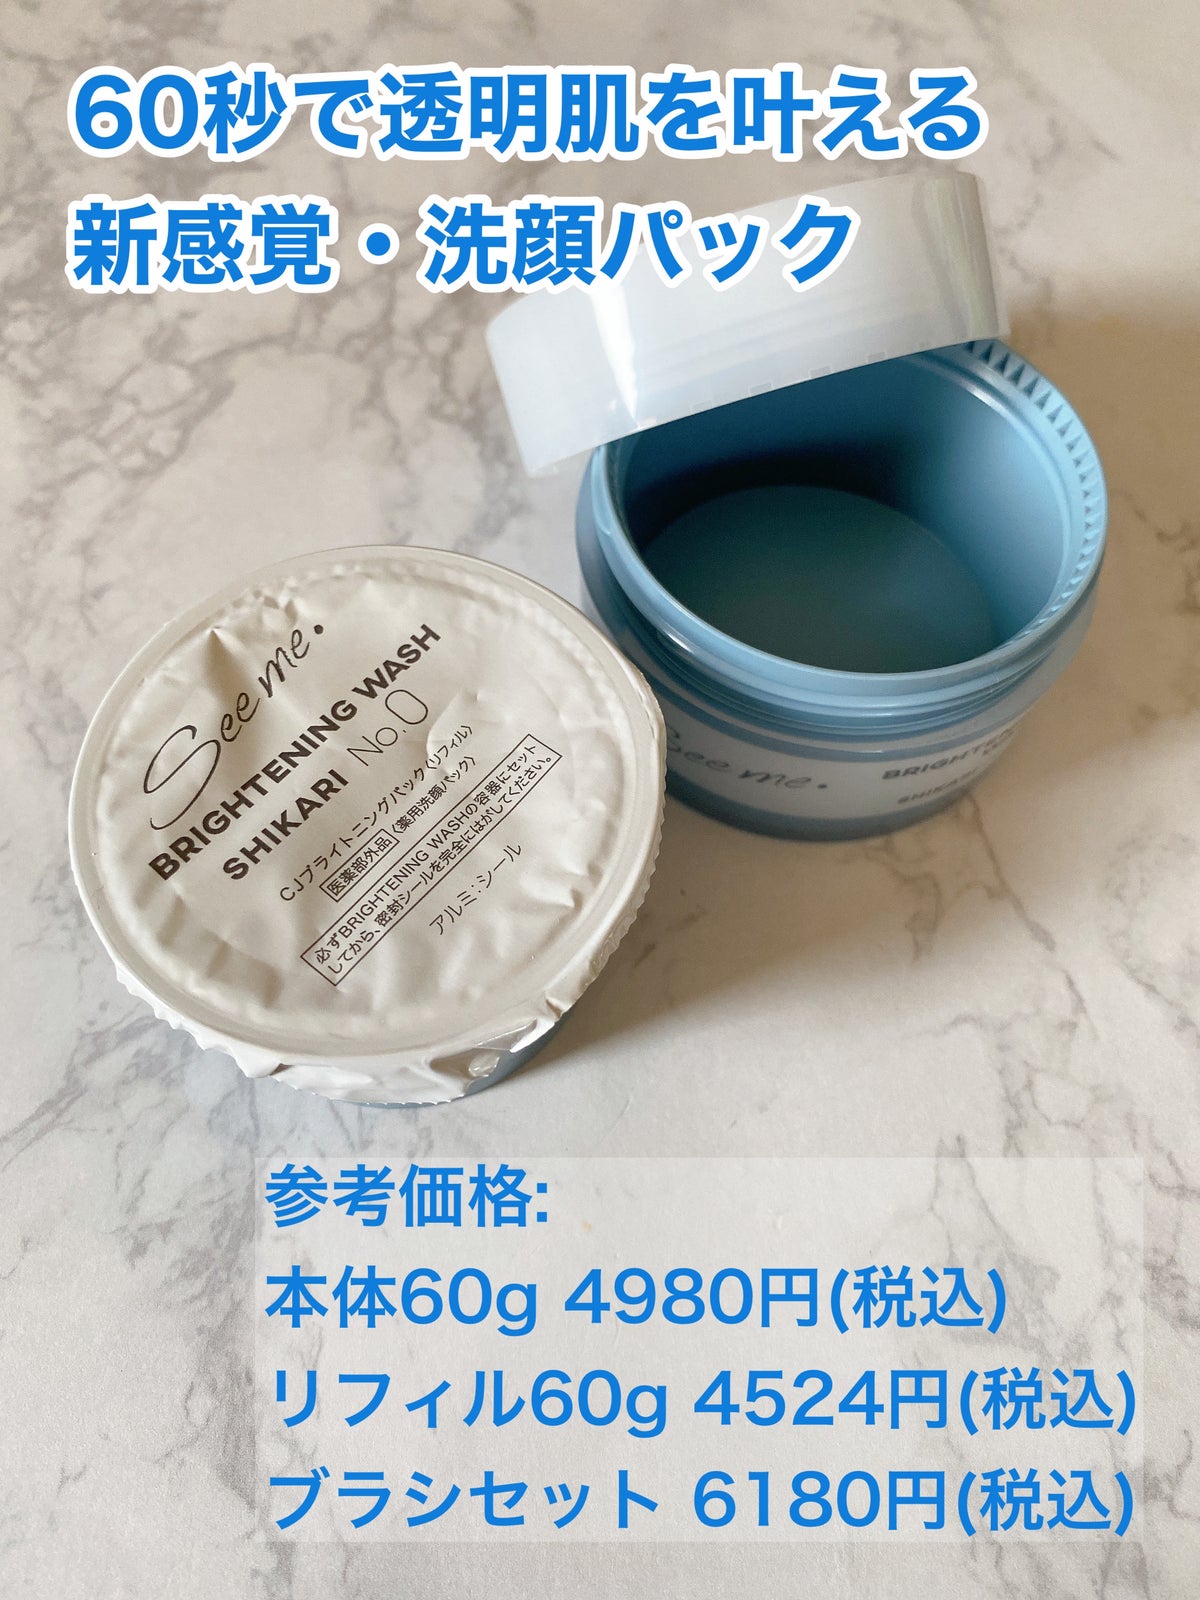 SHIKARI ブライトニングパック リフィル ブラシセット - 洗顔グッズ